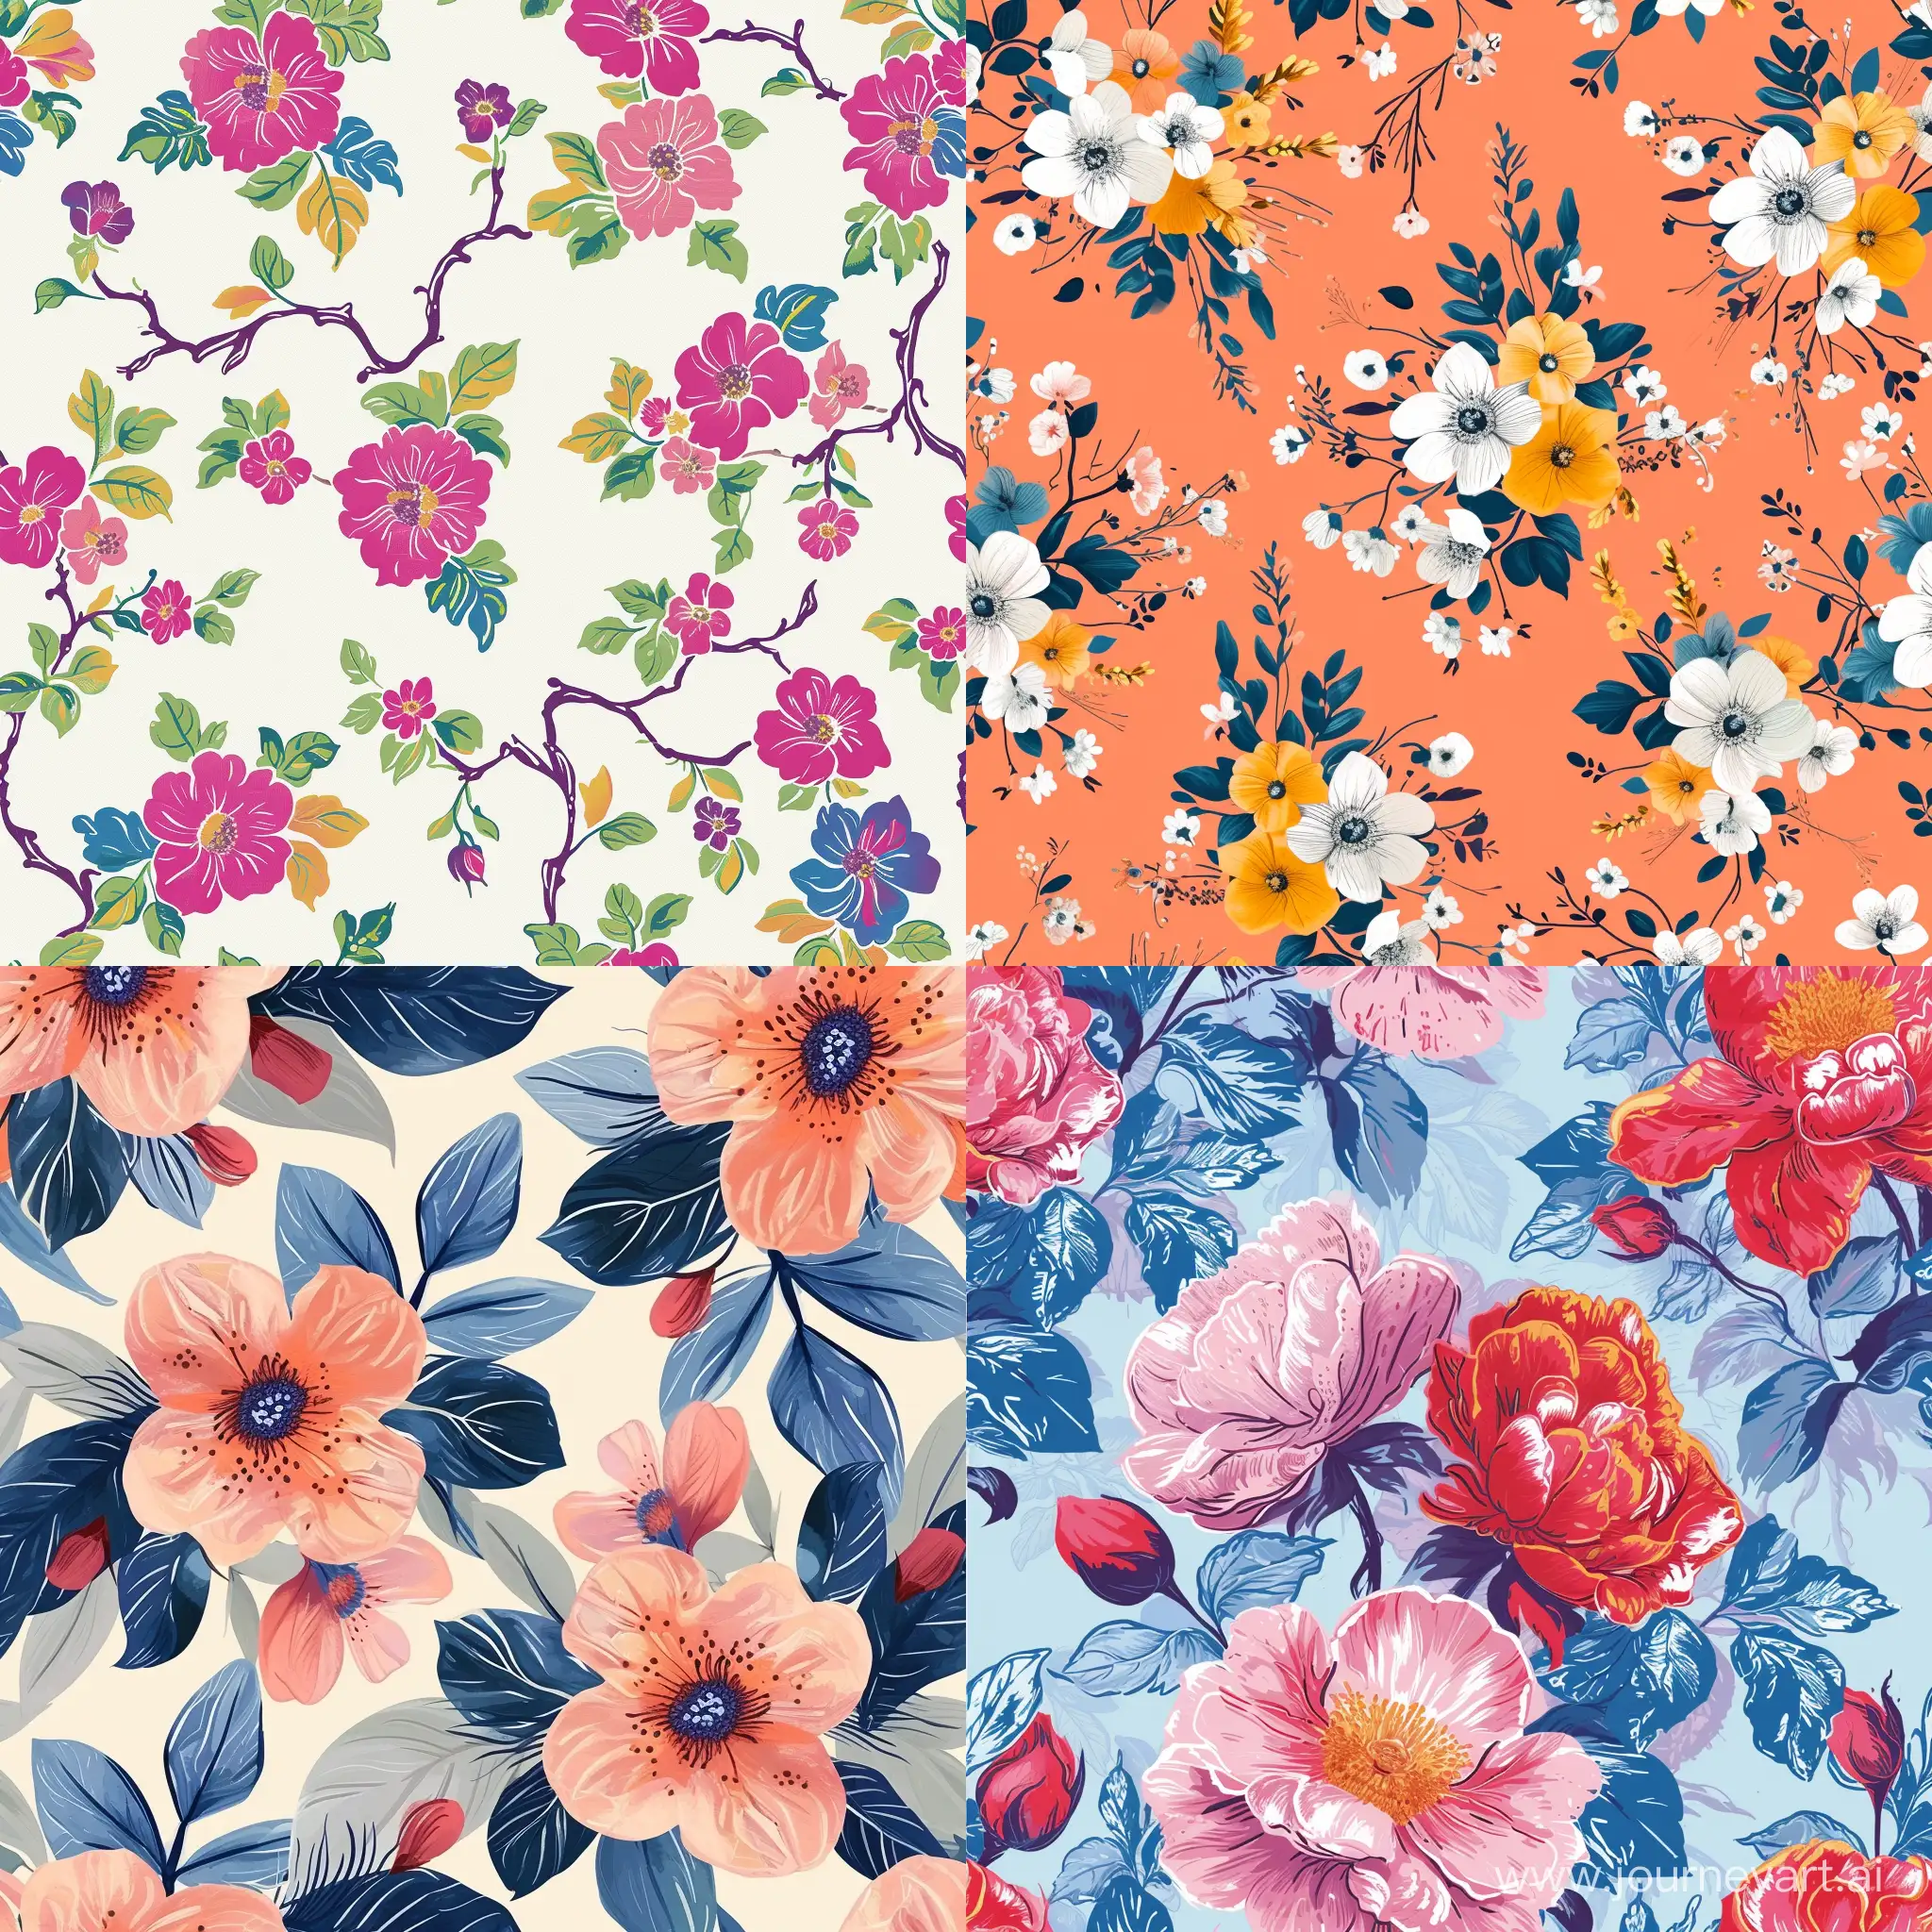 Exquisite-Floral-Seamless-Textile-Pattern-Design